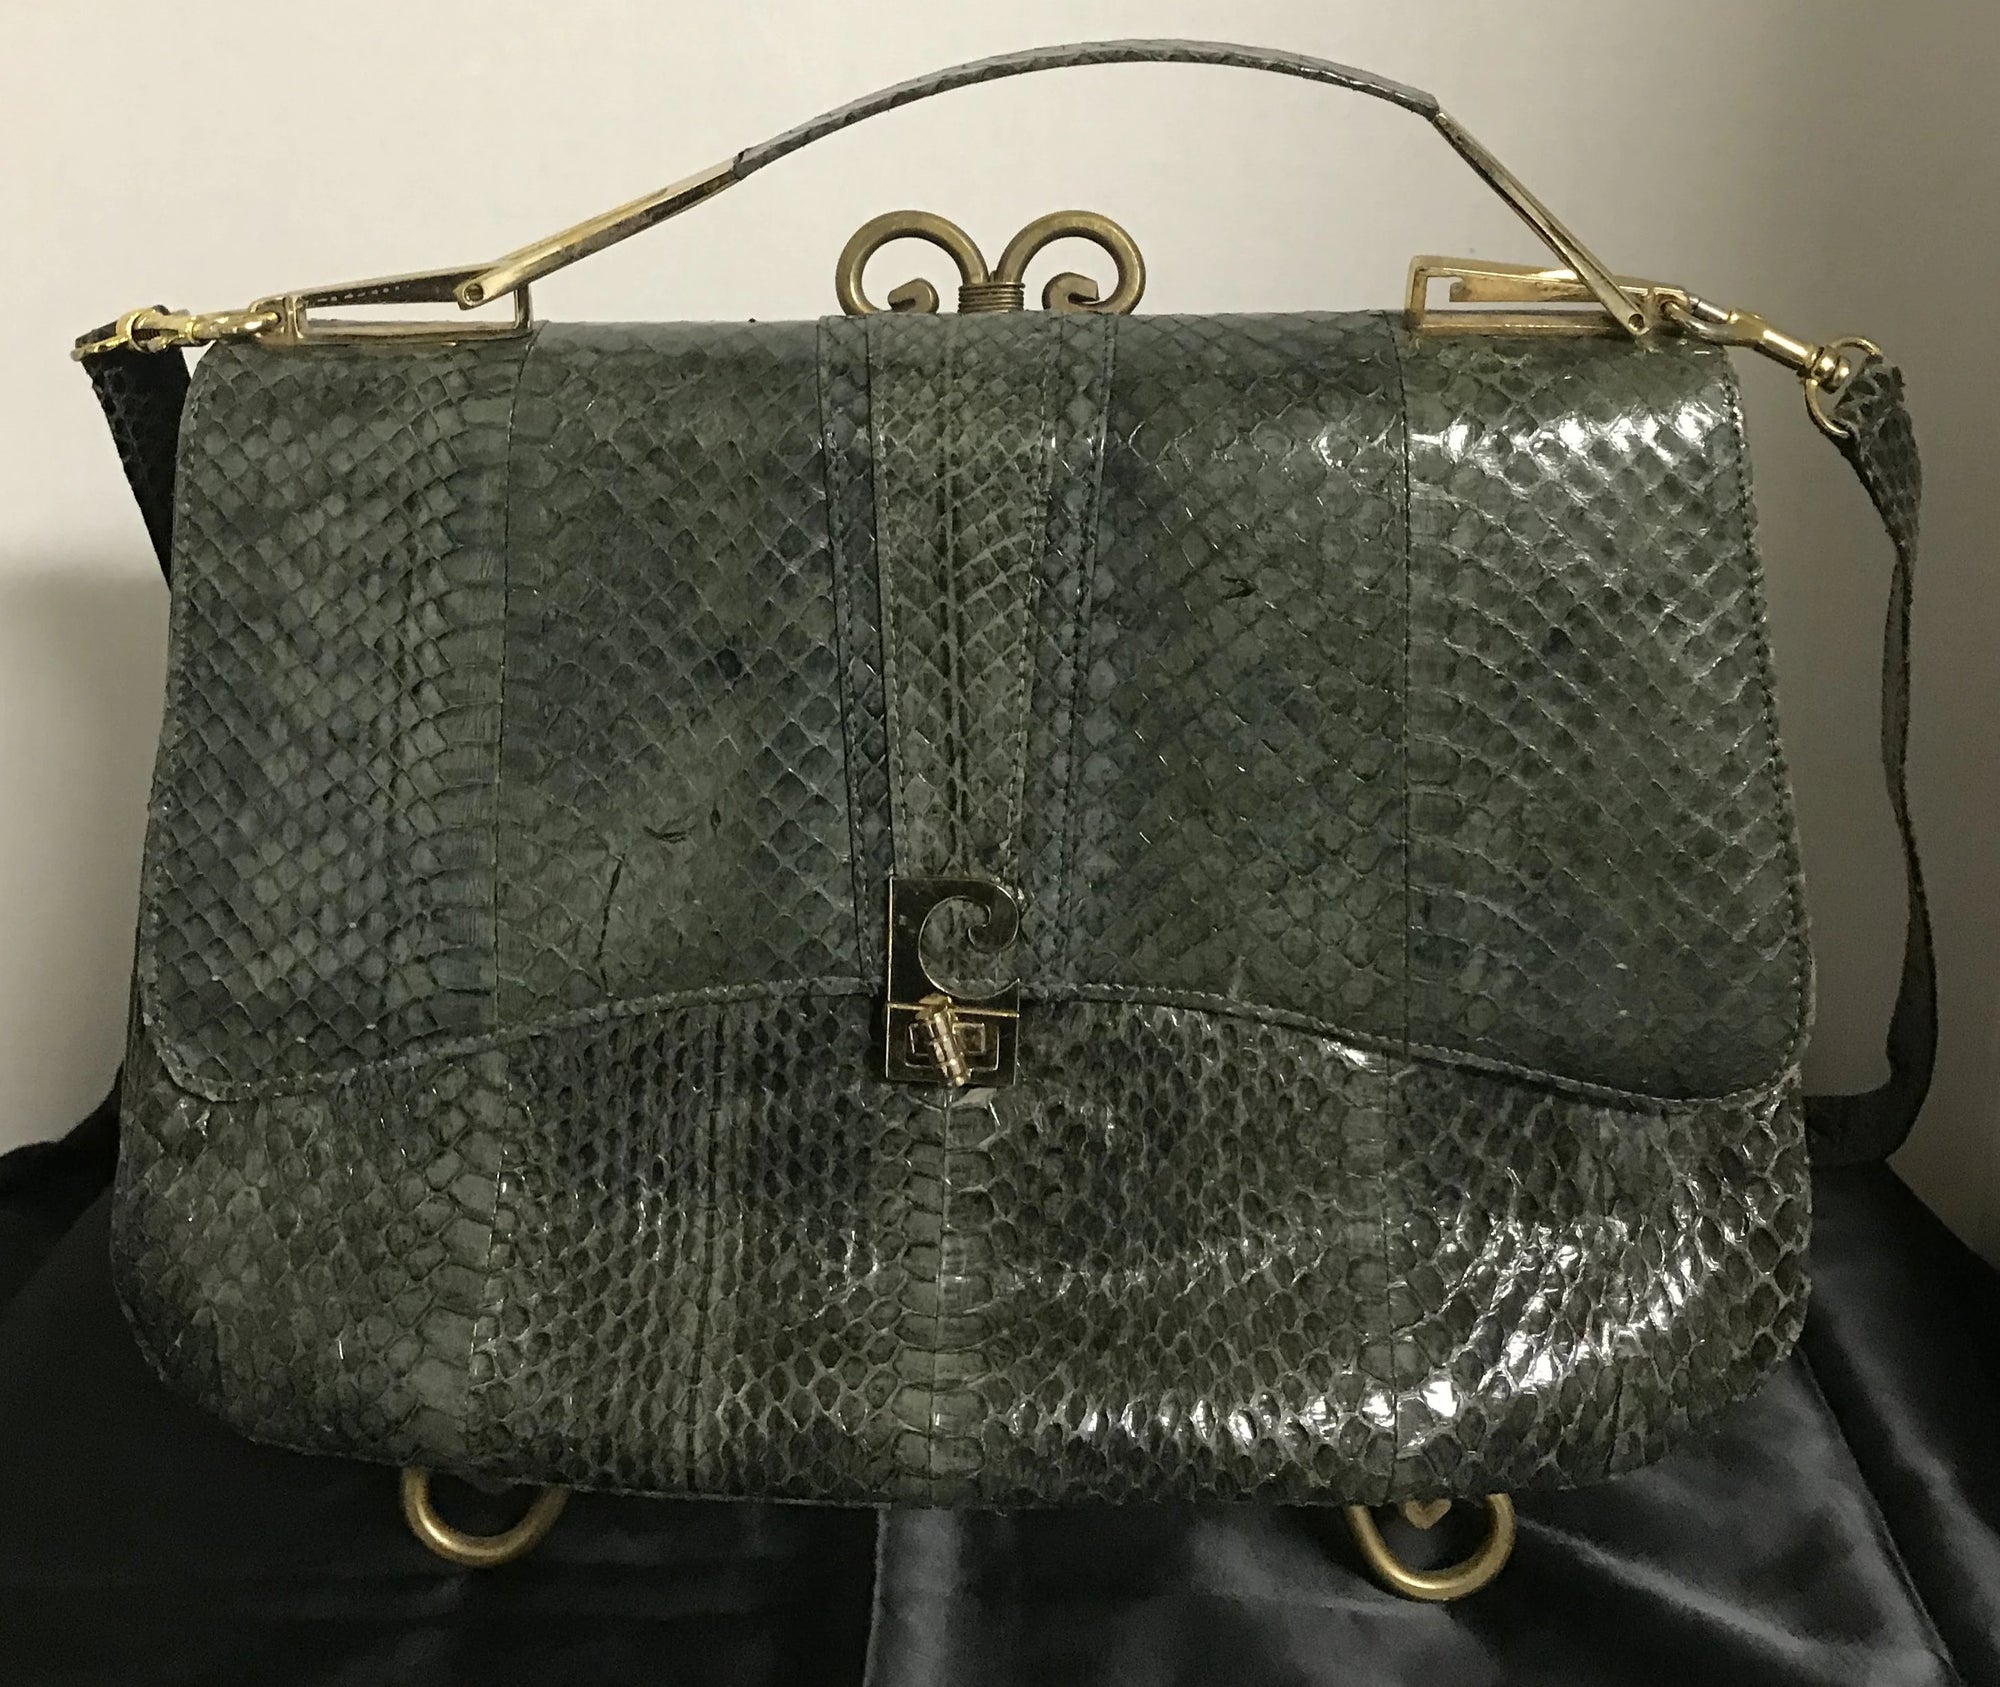 Shop Pierre Cardin leather handbags for women at Pepper Brand Studio